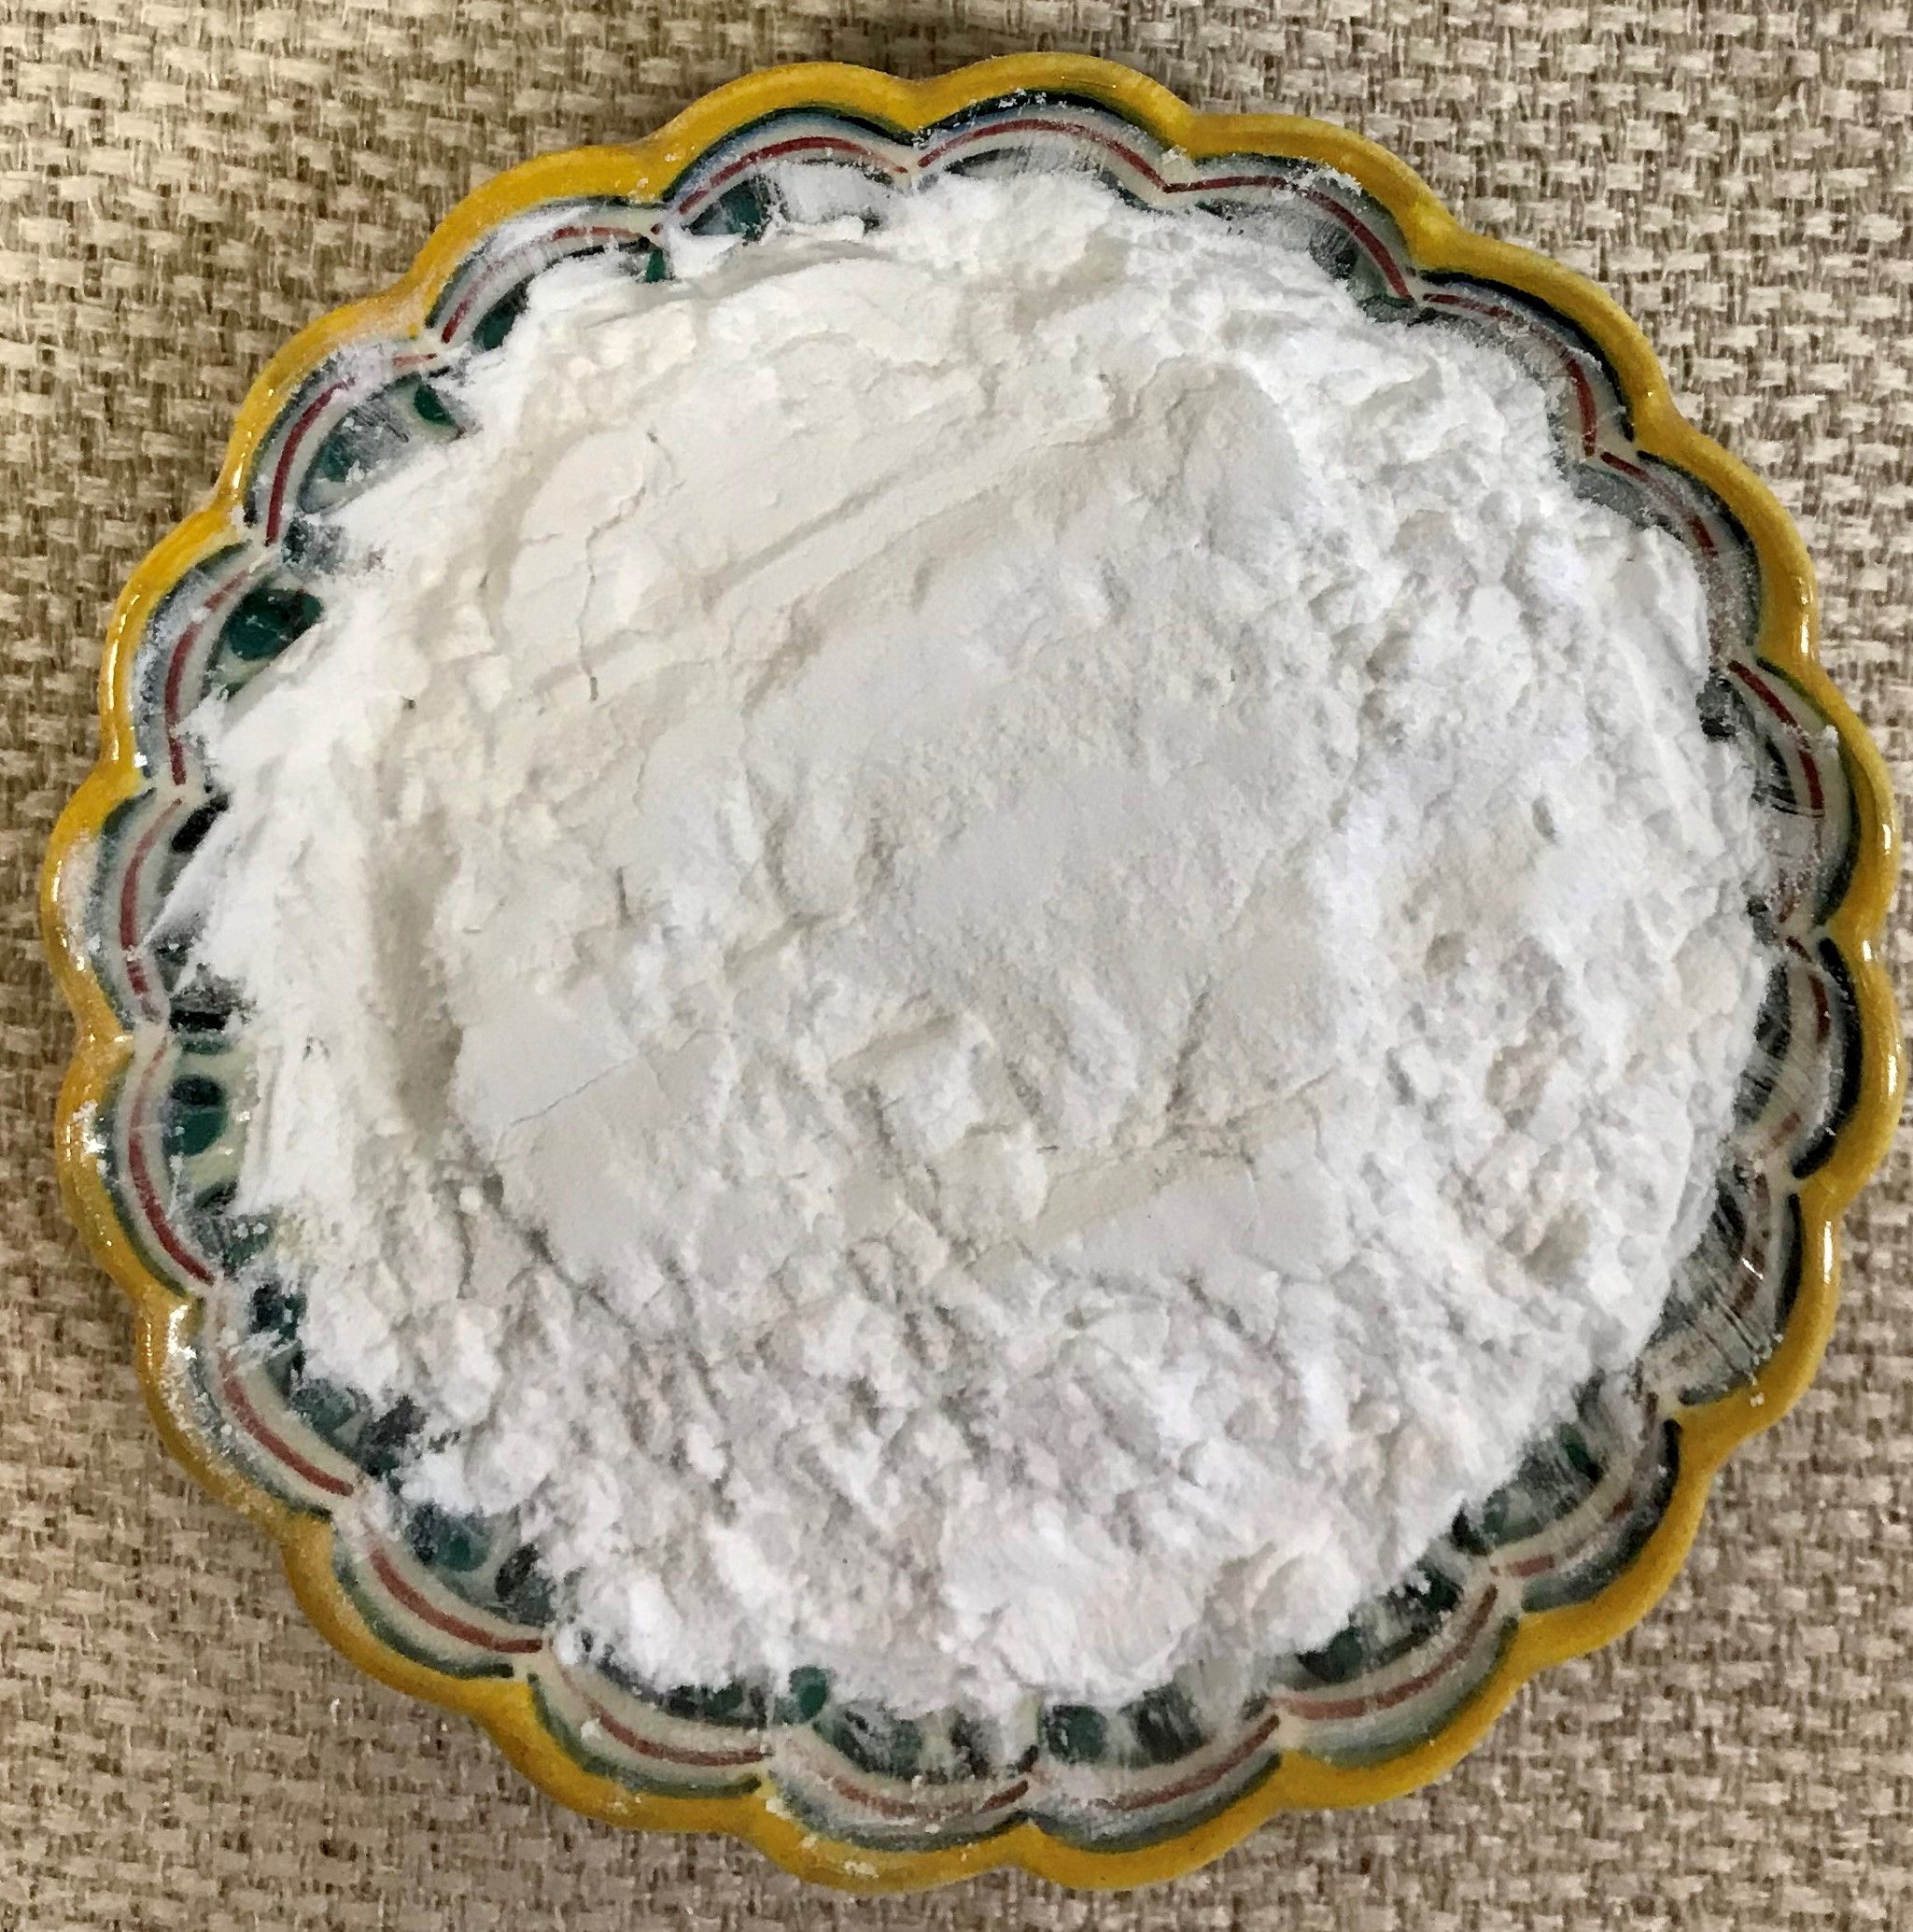 arrowroot starch/ arrowroot powder from vietnam/